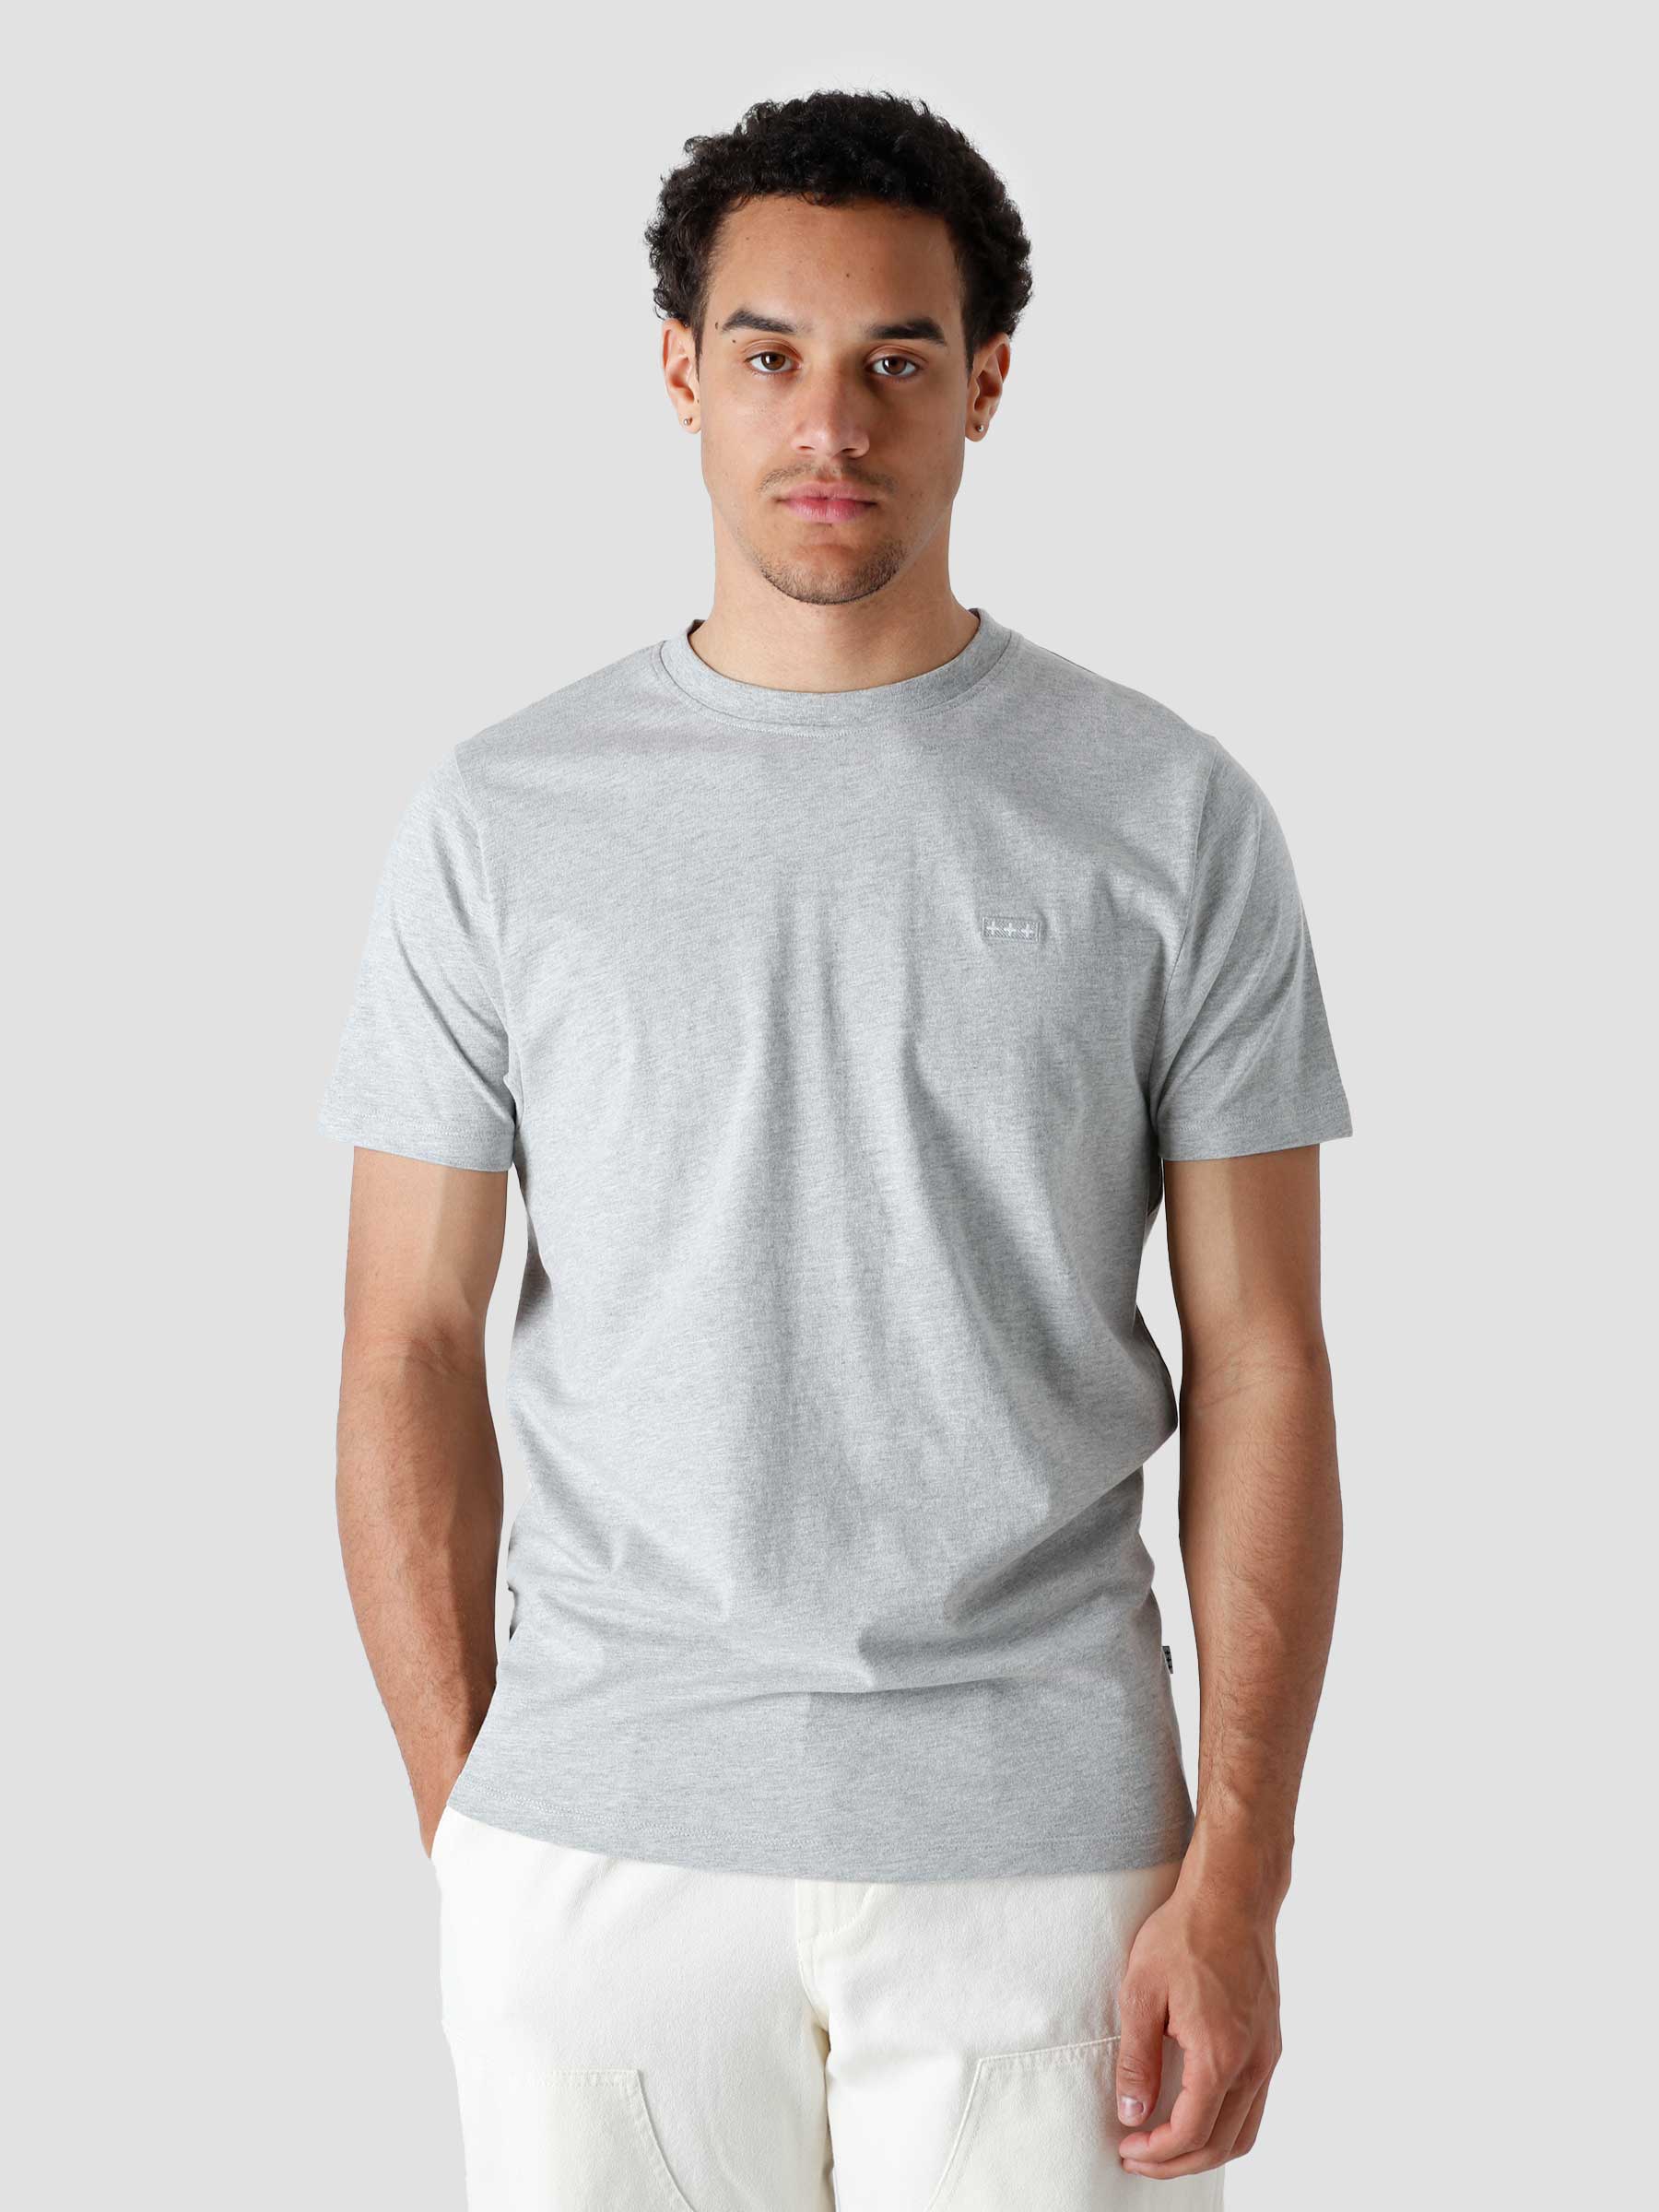 QB03 Patch Logo T-Shirt Grey - Freshcotton